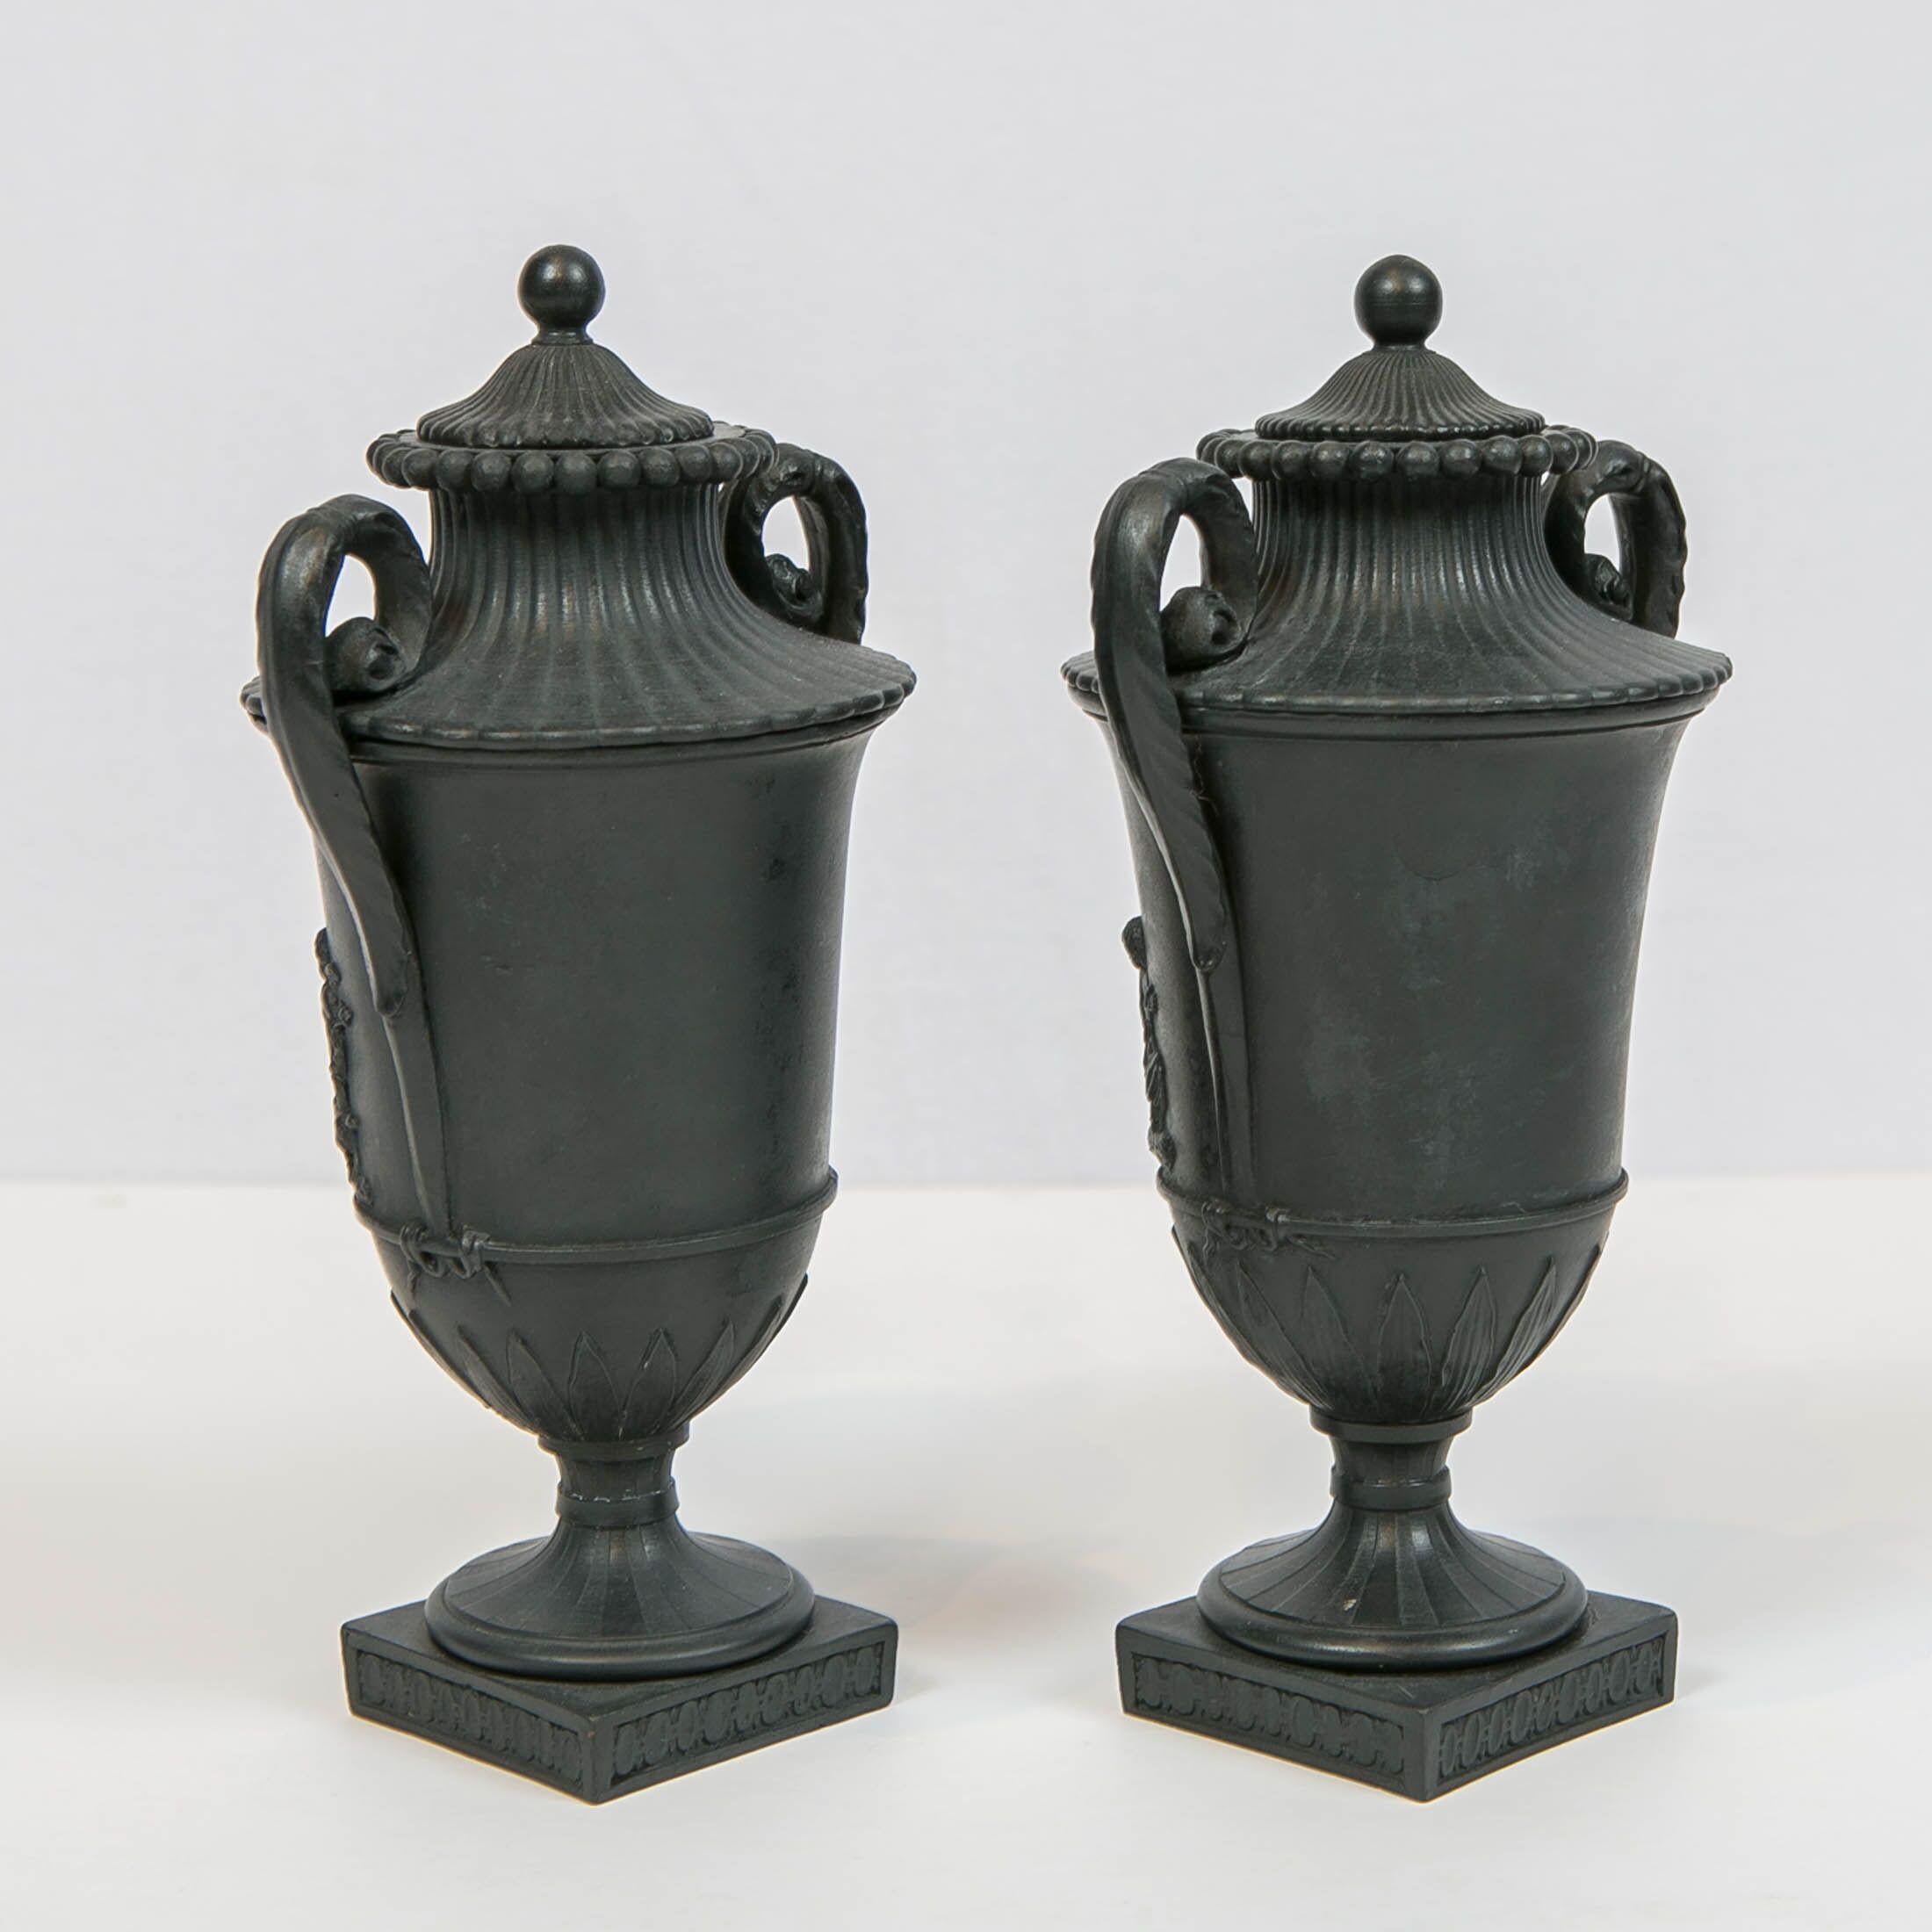 Molded Pair of Small Wedgwood Black Basalt Vases Made circa 1800